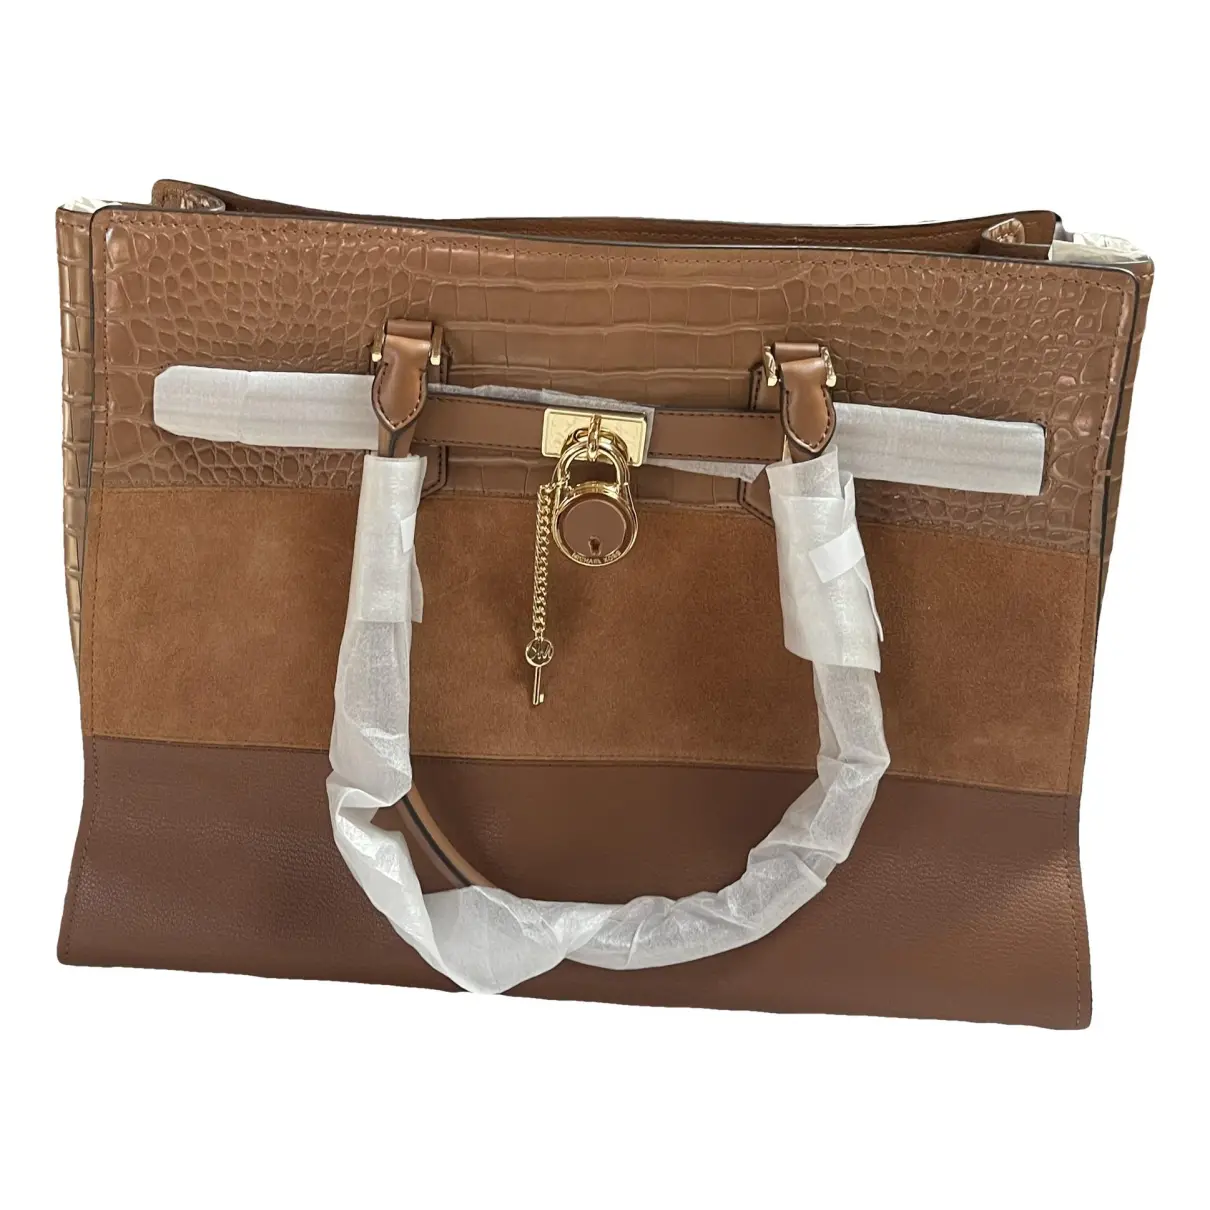 Hamilton leather handbag